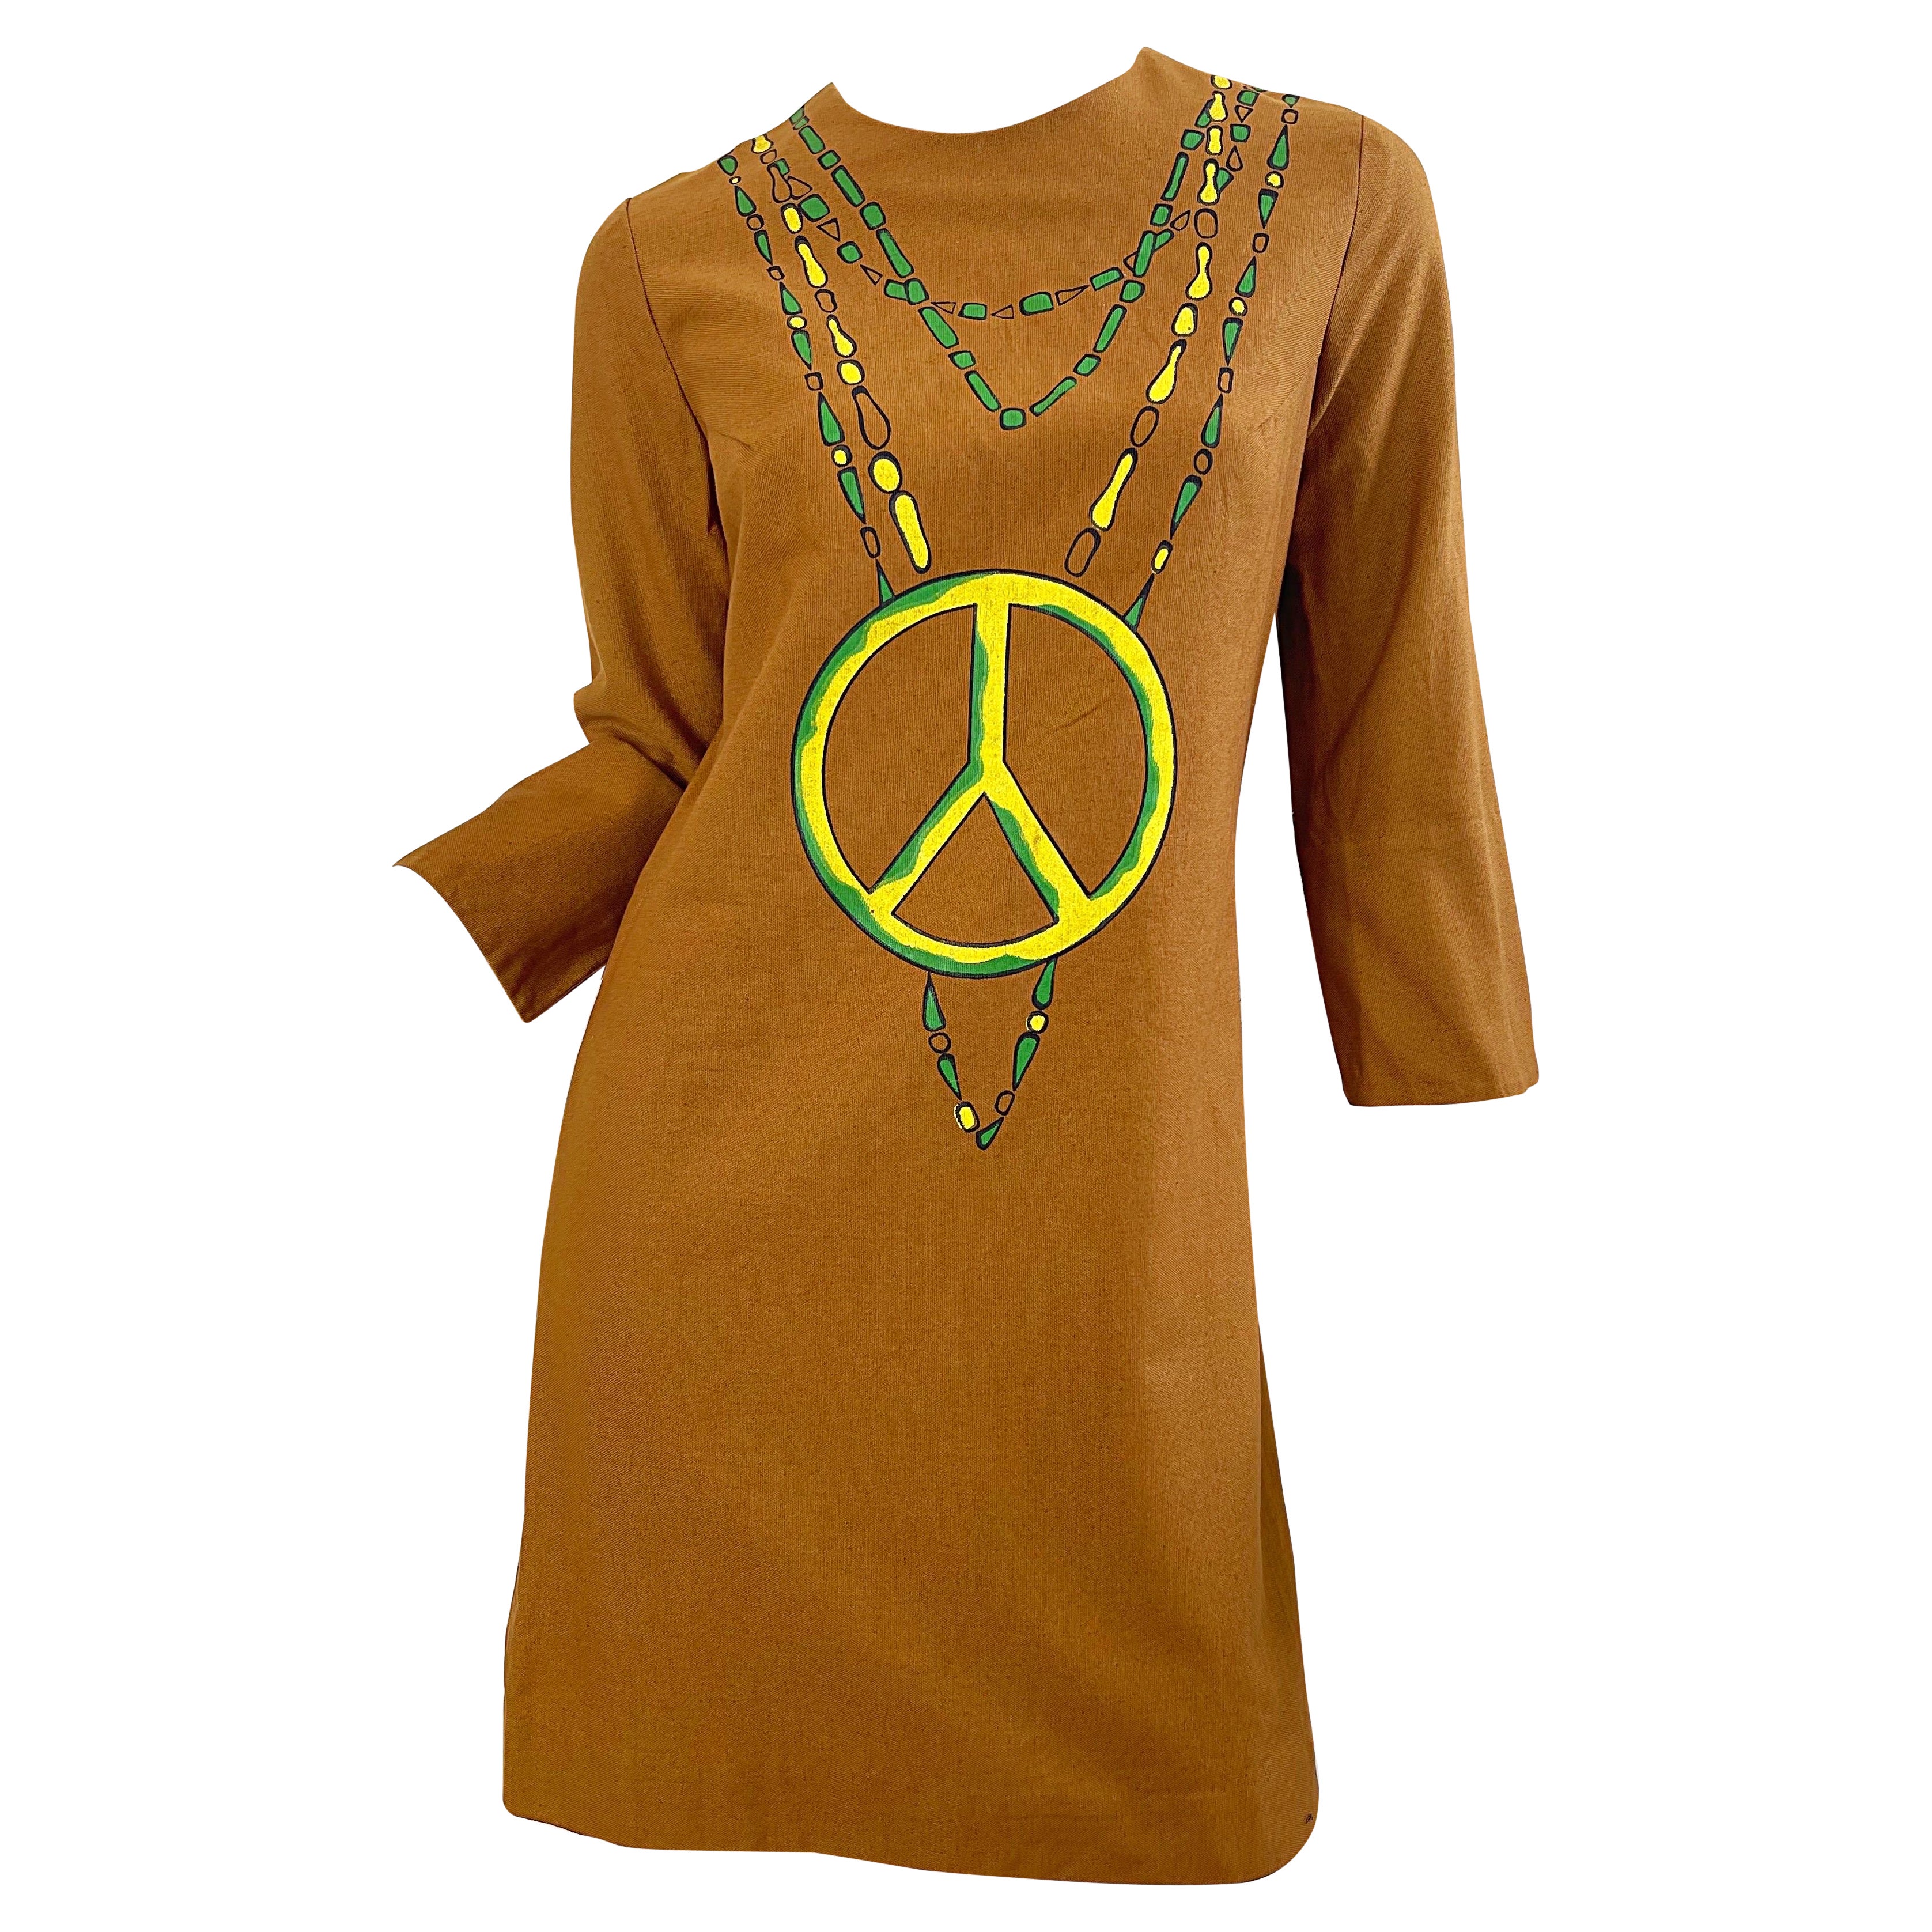 NWT 1960s Trompe L’Oeil Hand Painted Peace Sign 60s Vintage Cotton Dress 